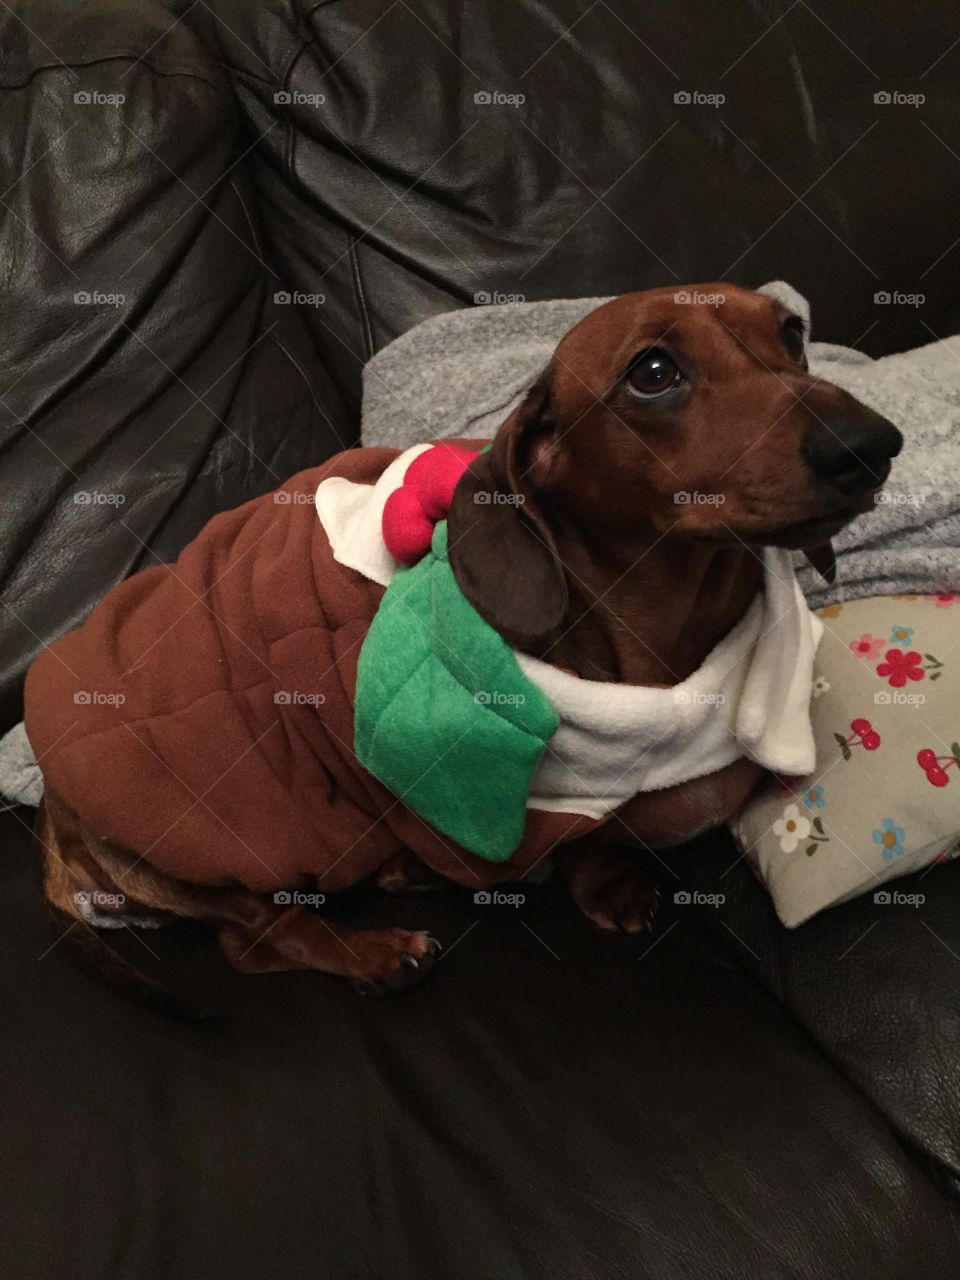 Dachshund dressed as a Christmas pudding